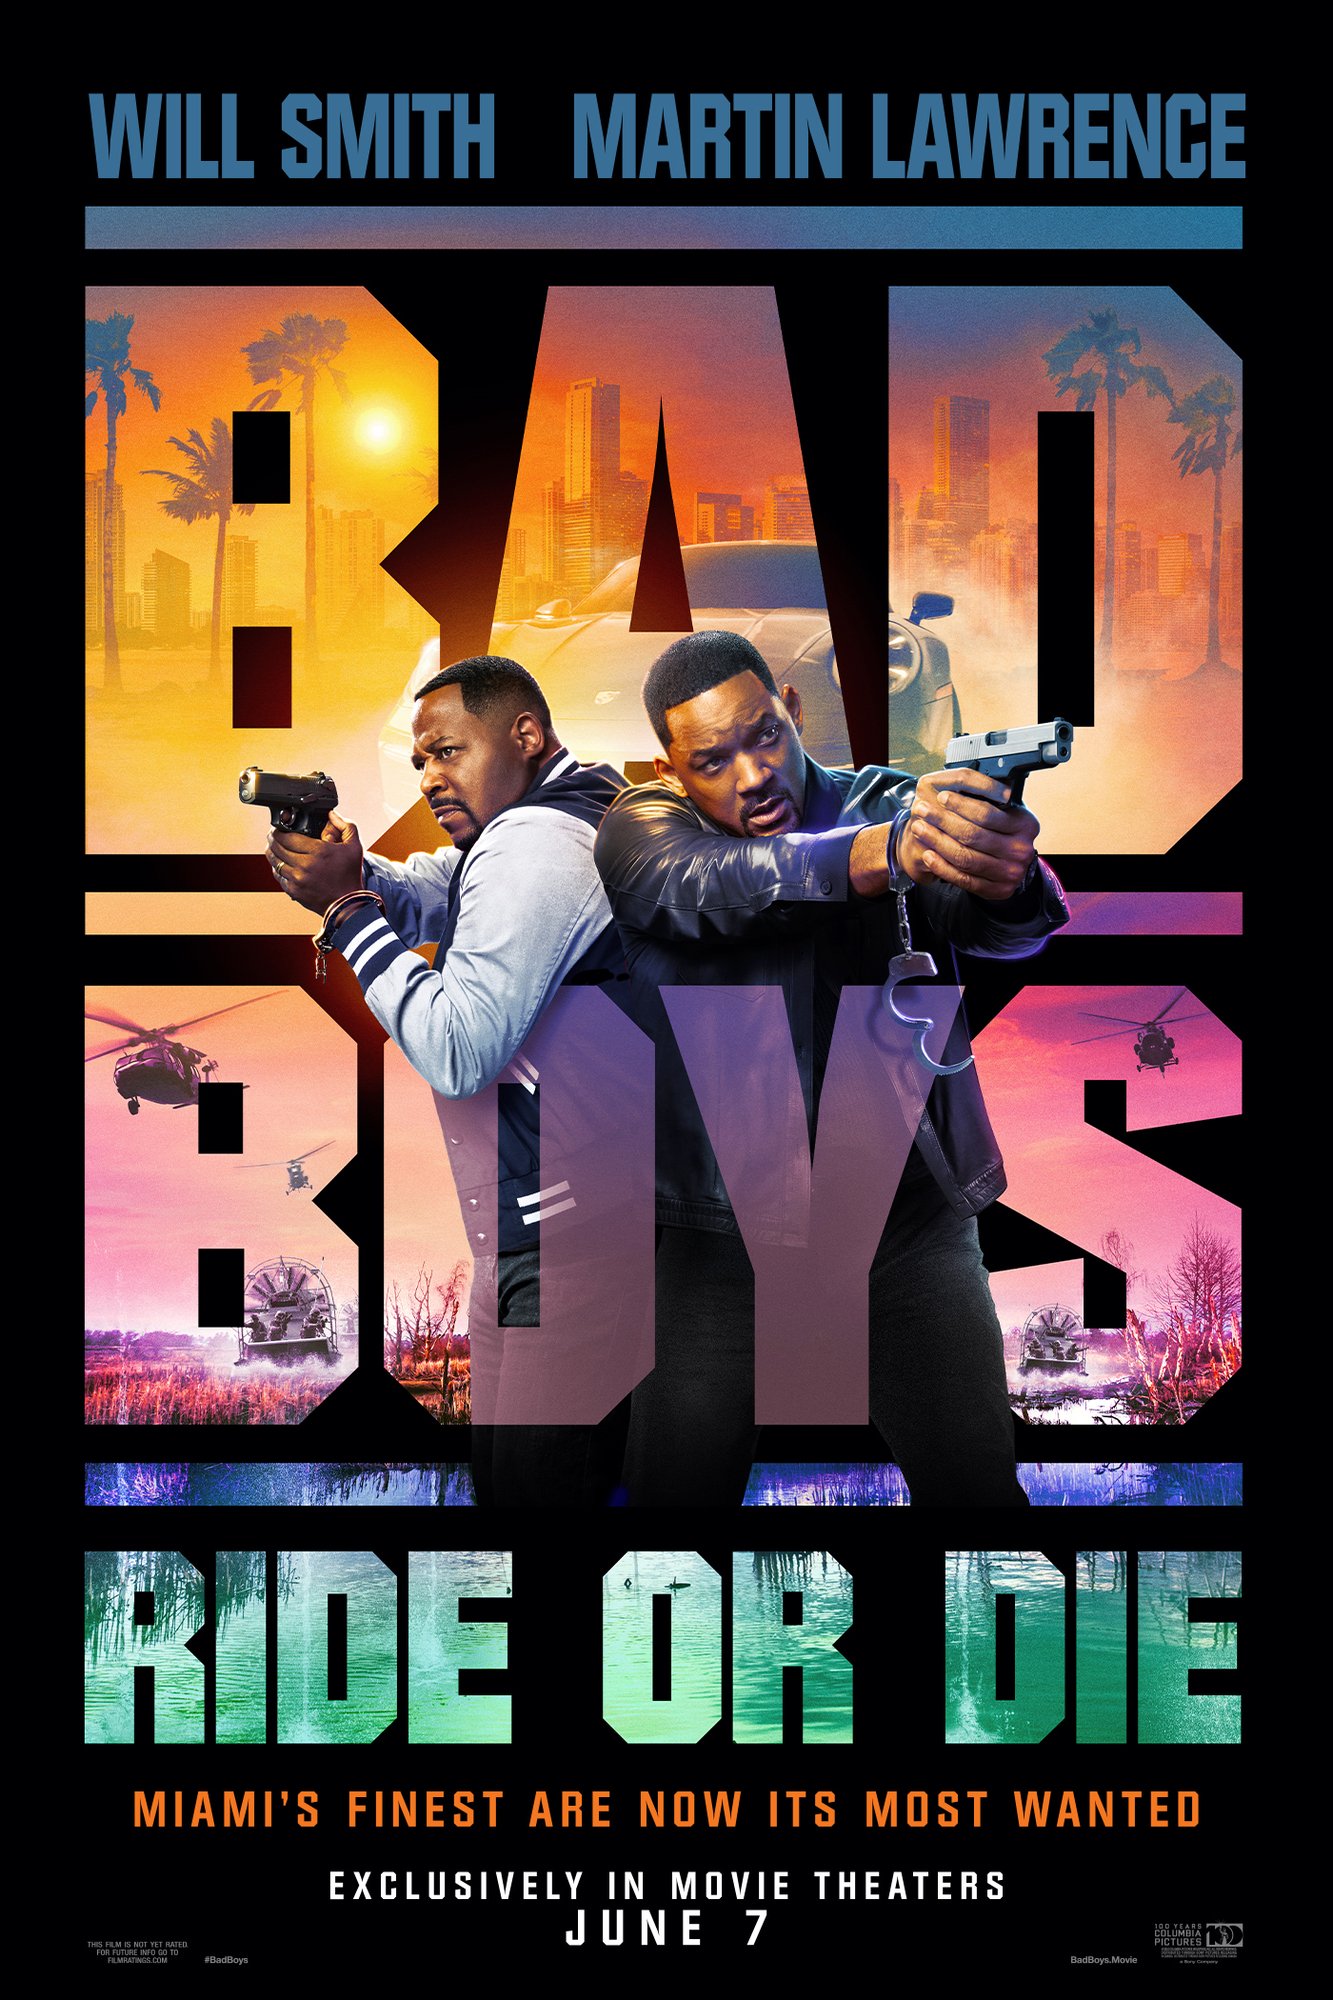 Untitled Bad Boys Sequel